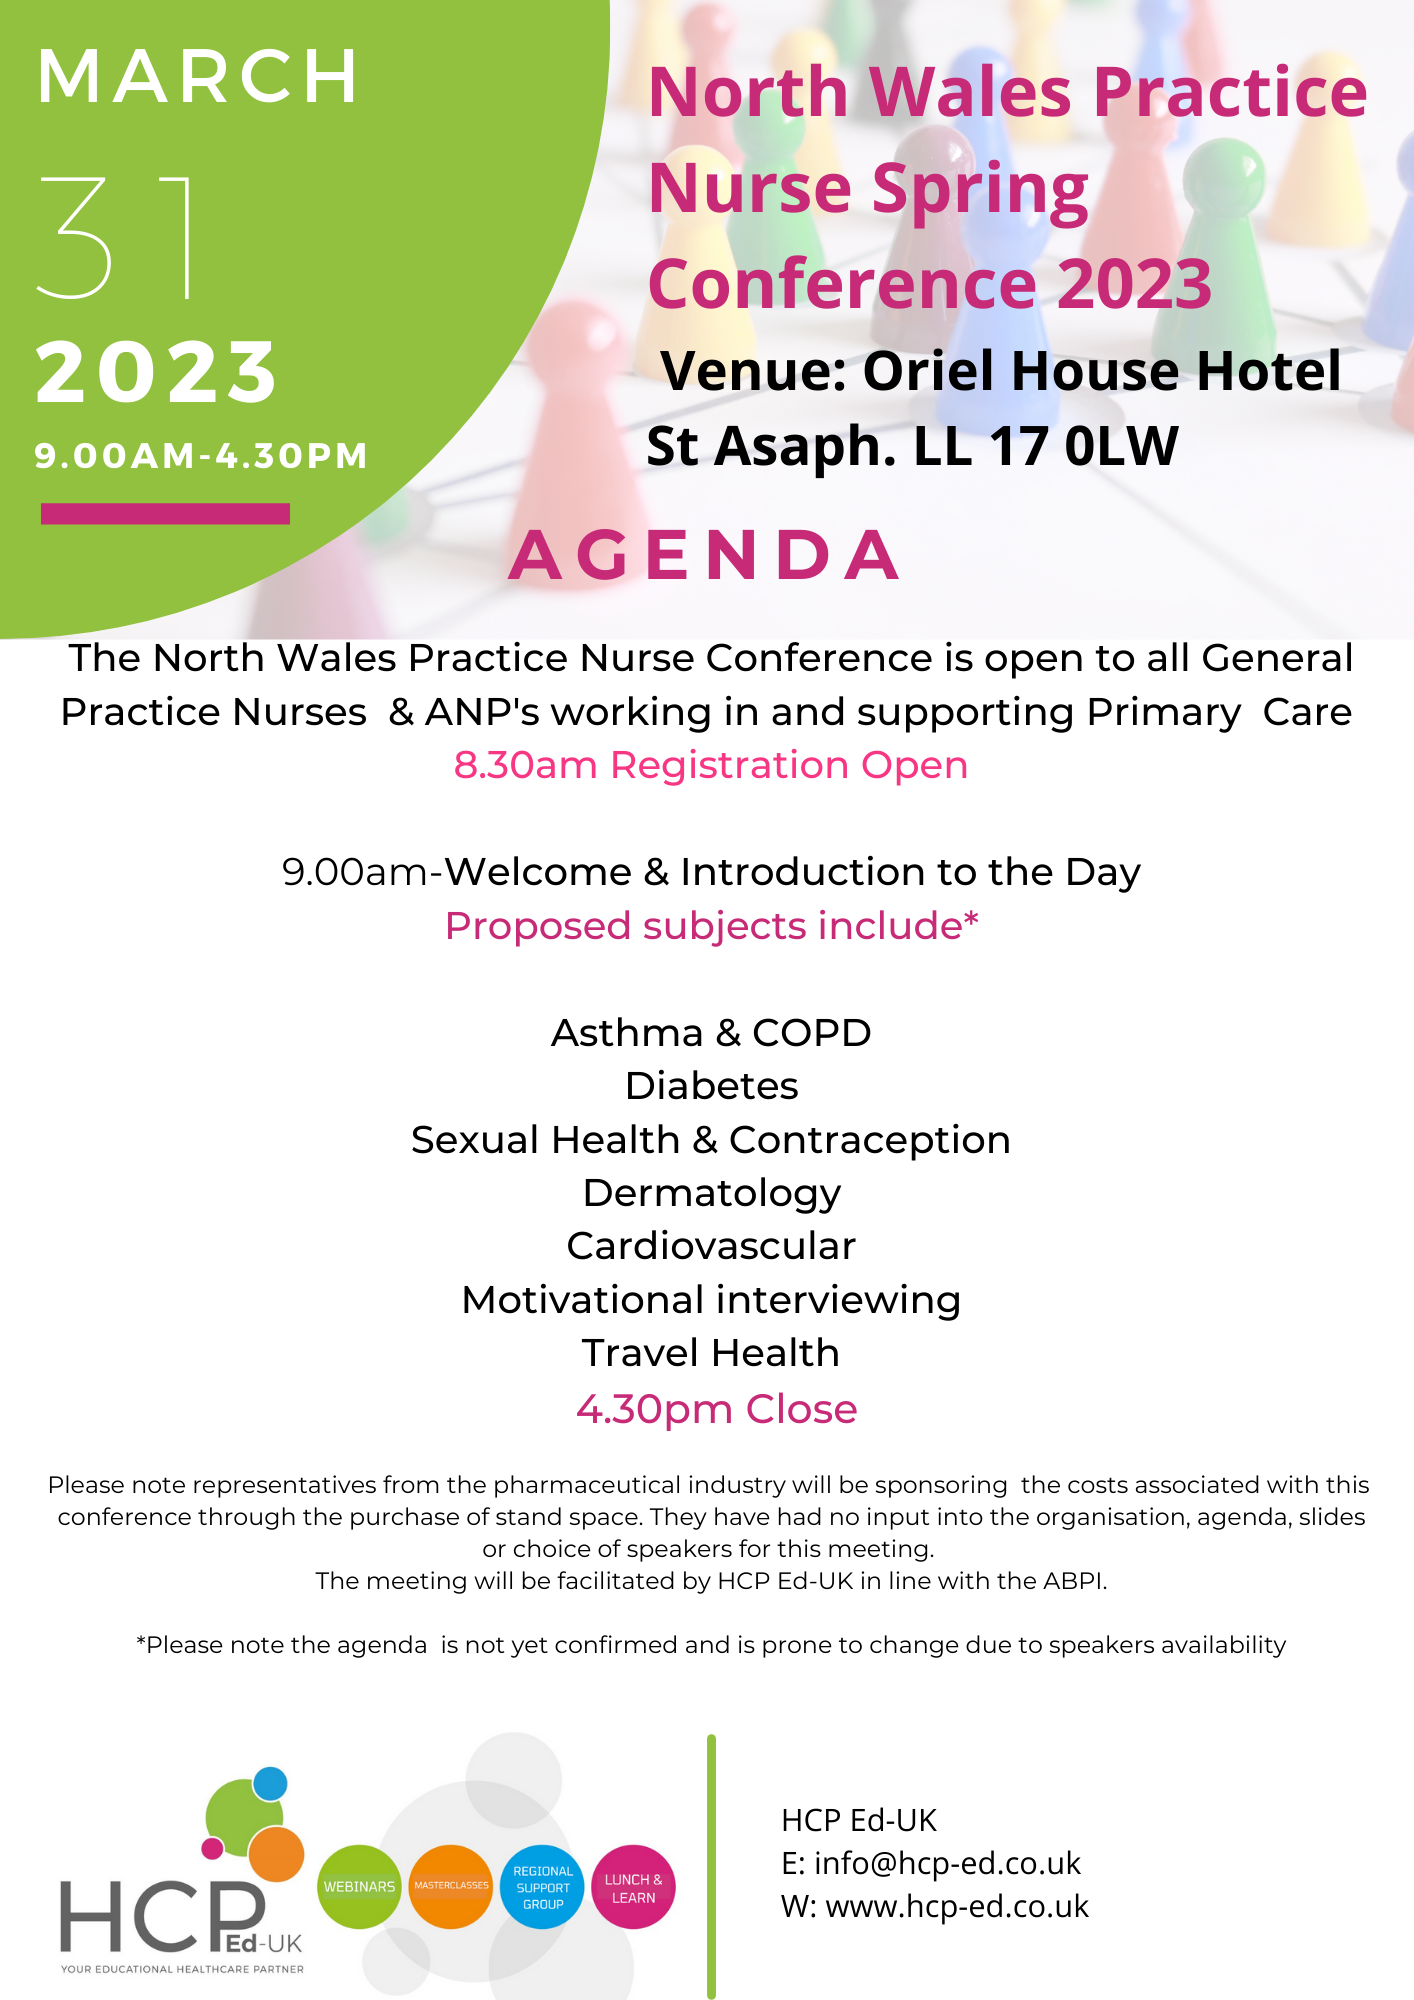 North Wales Practice Nurse Spring Conference 2023 HCP EdUK